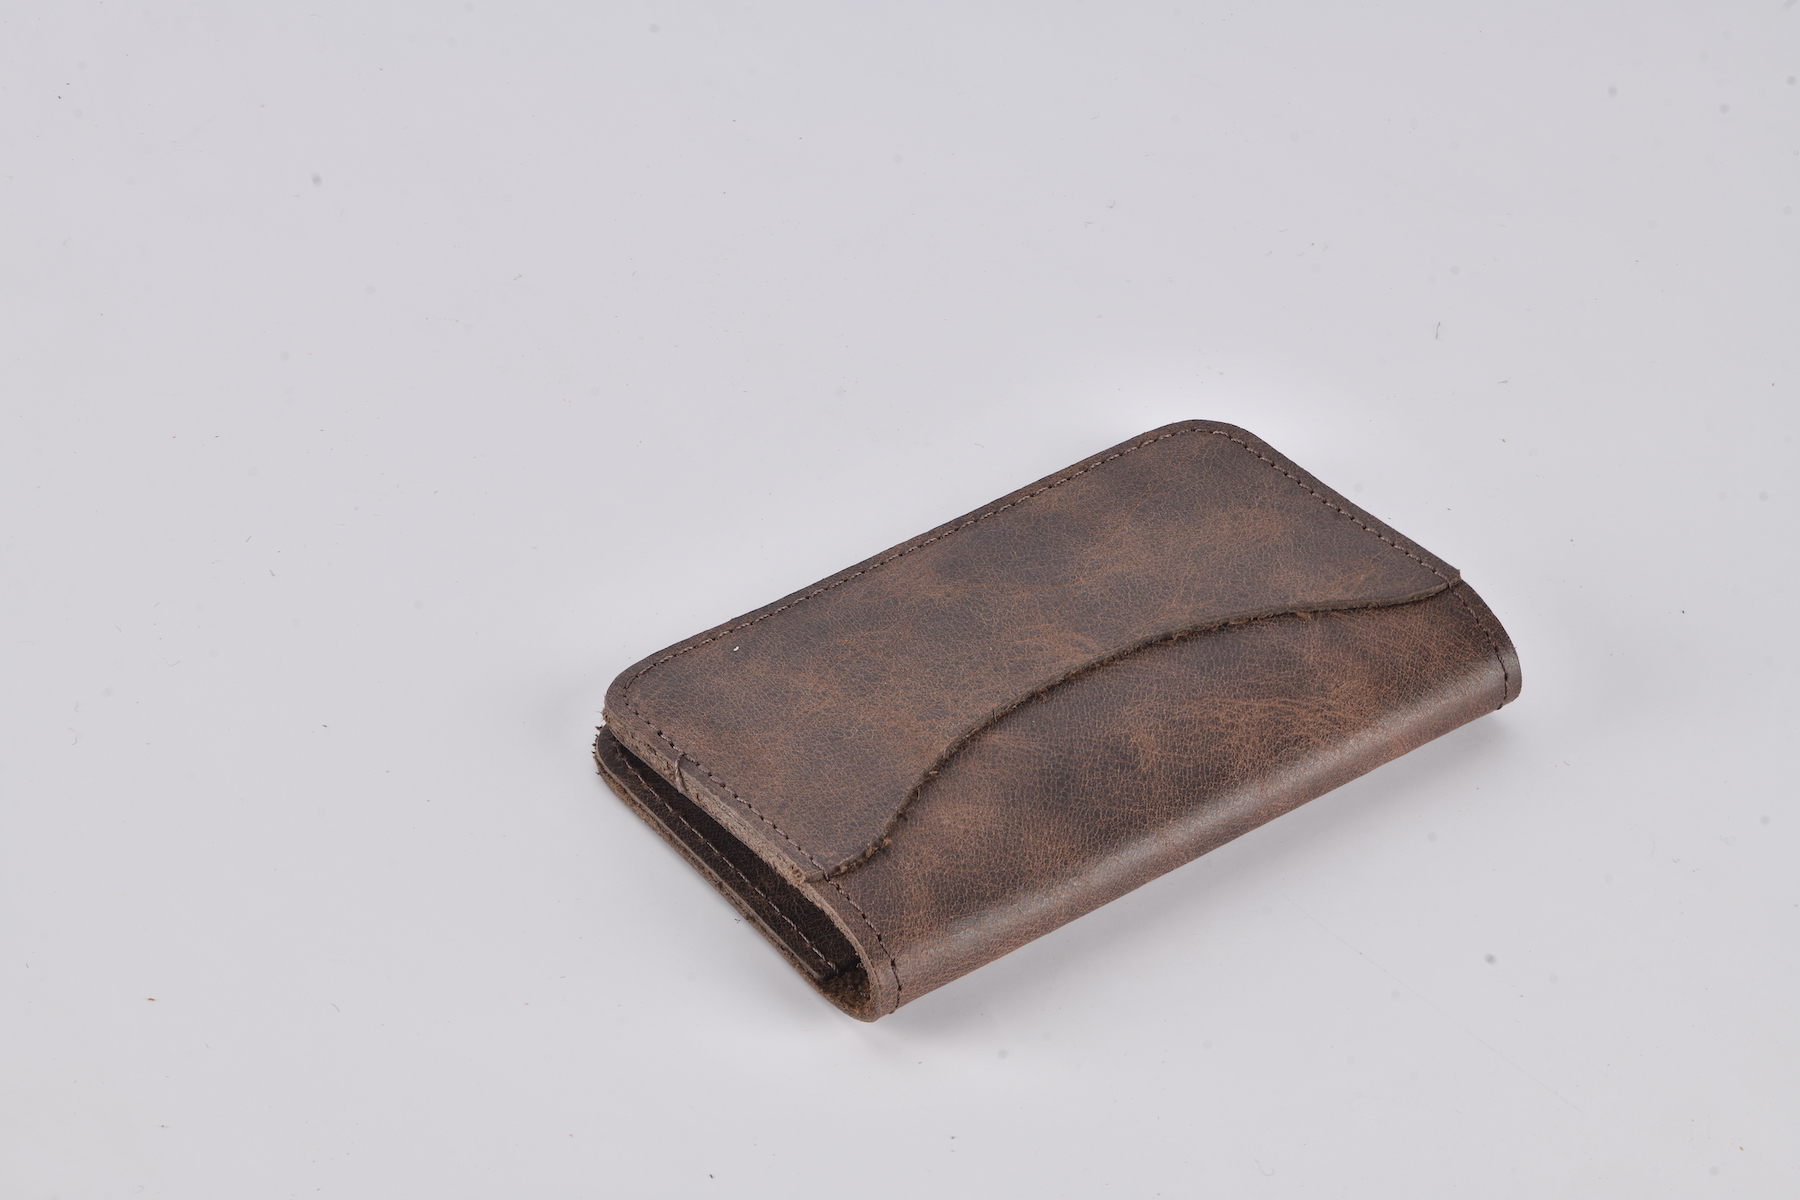 Amsterdam Wallet - Chocolate Brown